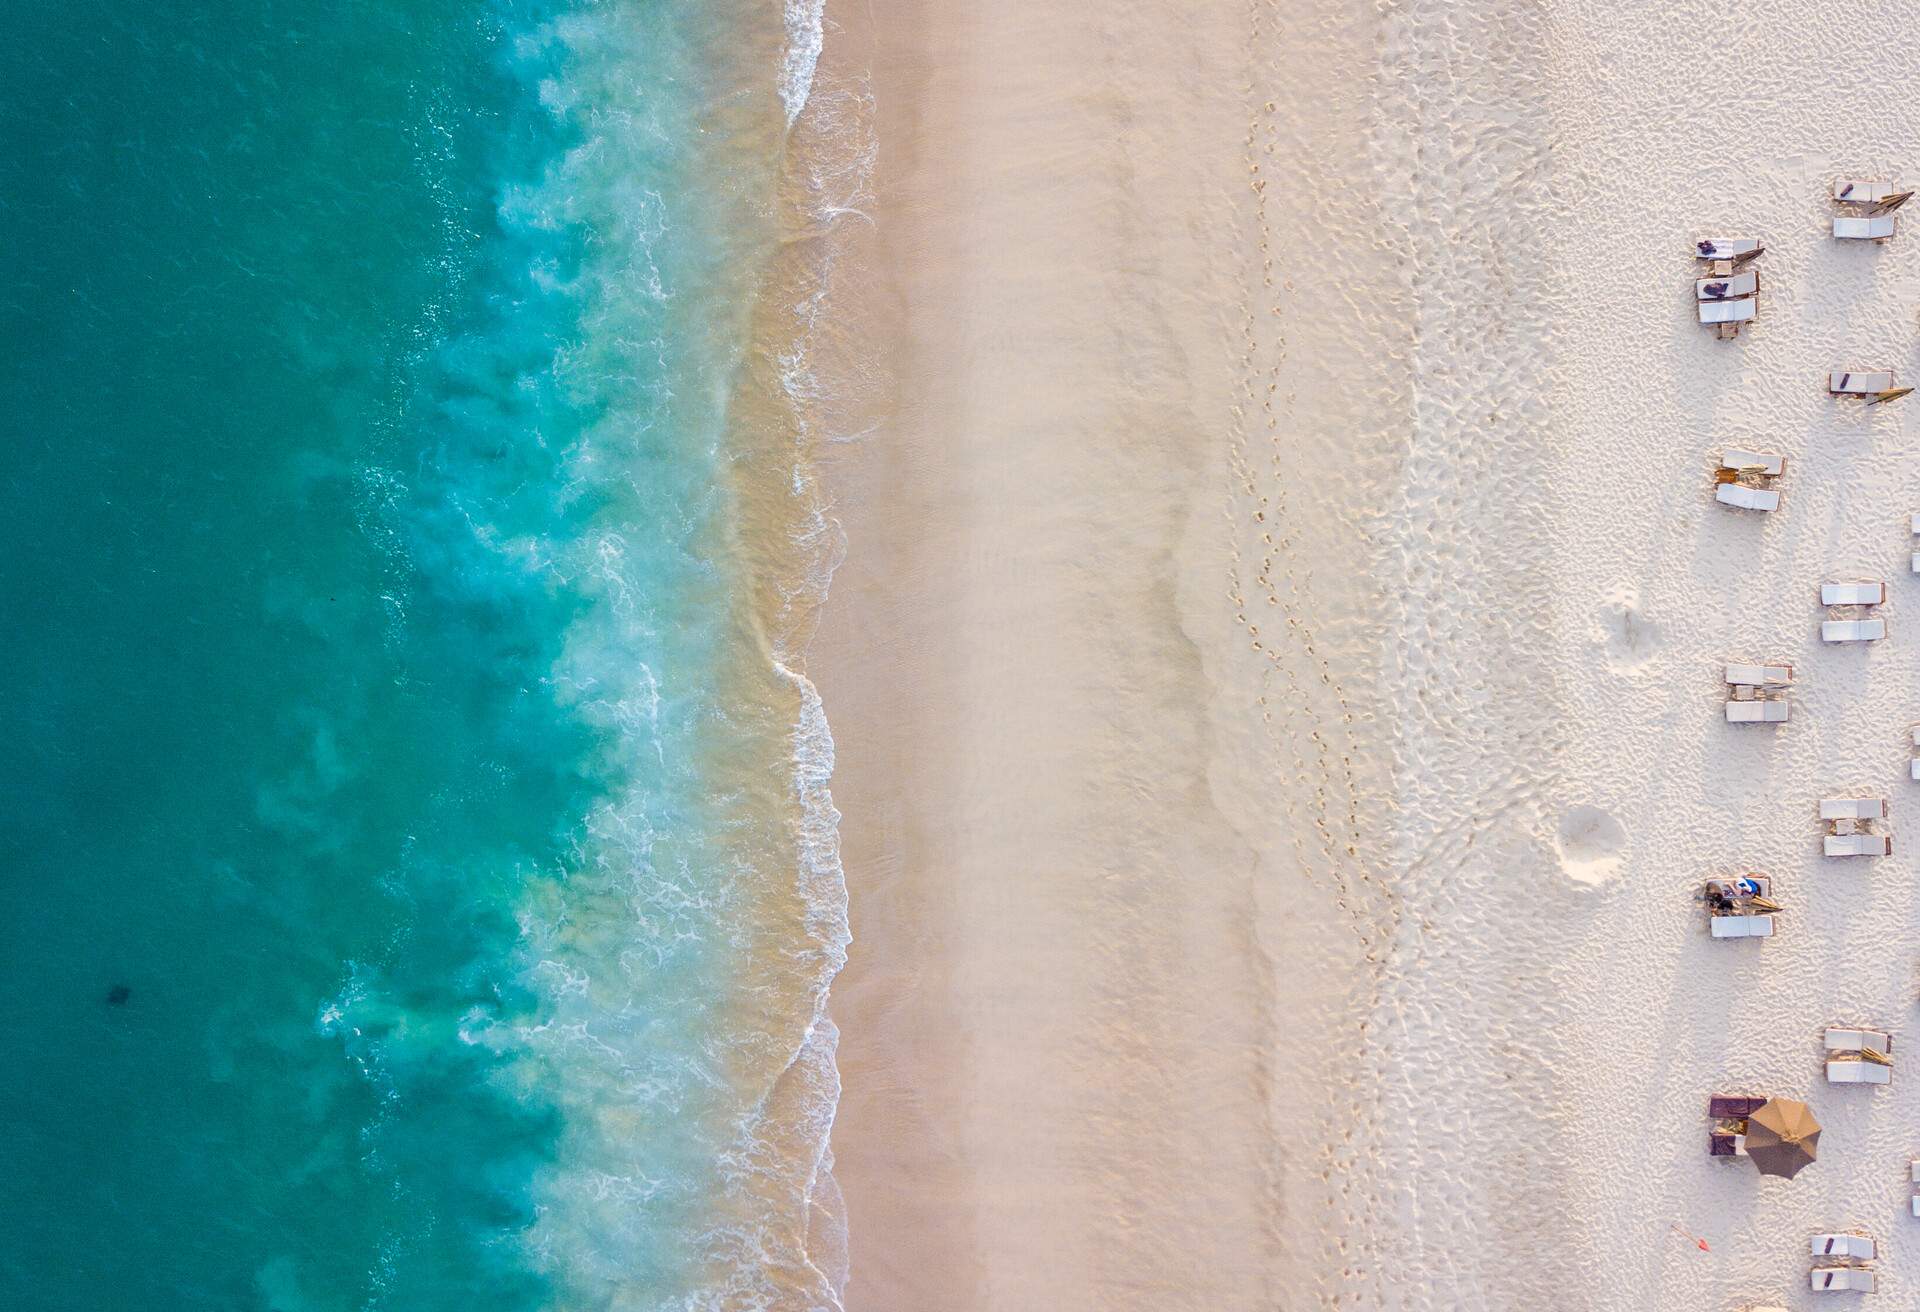 Aerial view beach in Cabo San Lucas in Baja California Sur in Mexico